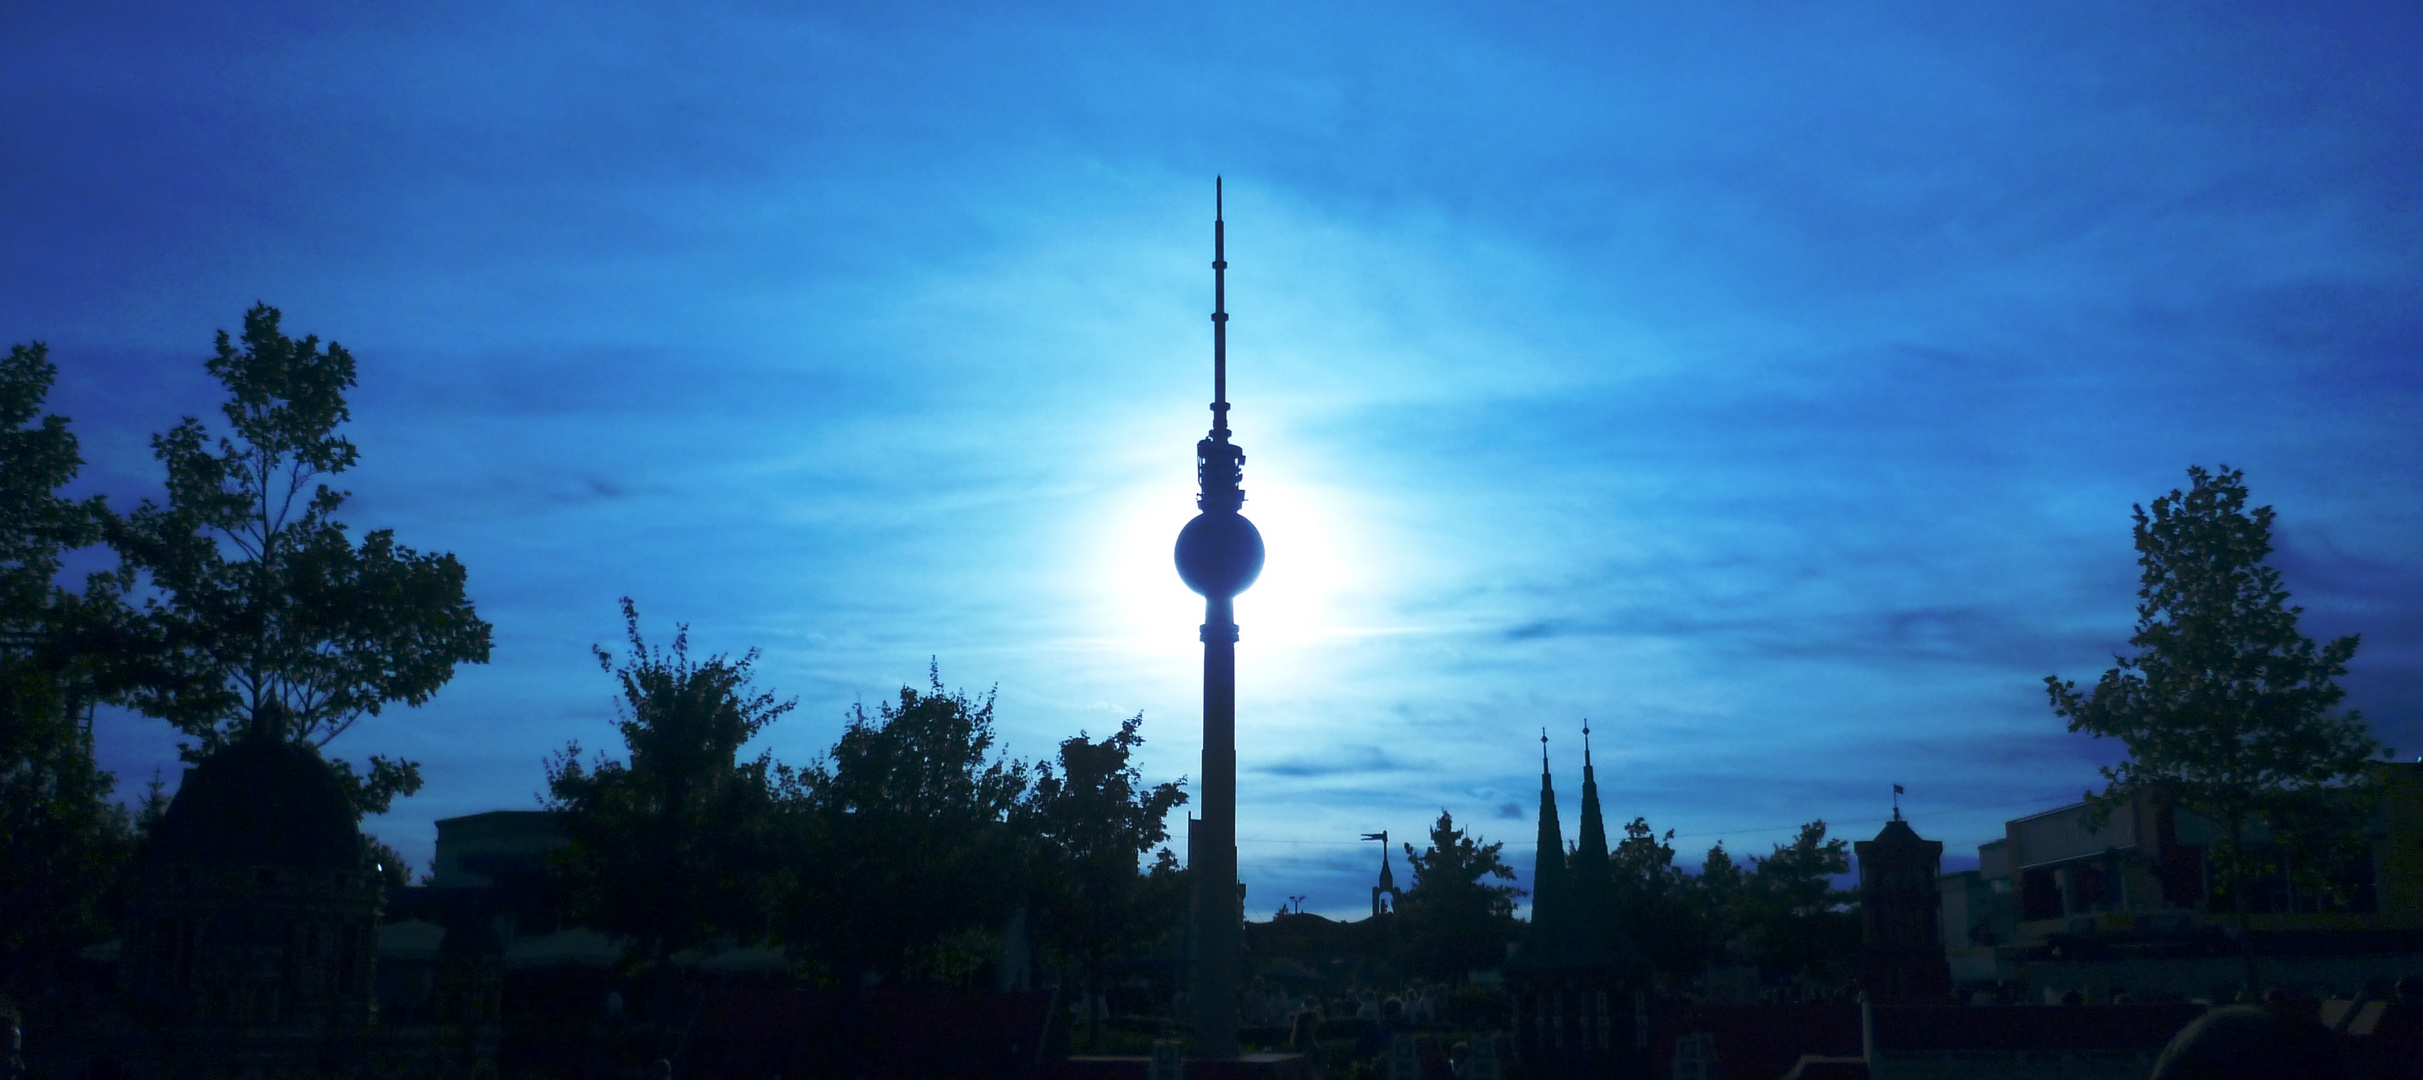 Sonnenfinsternis in Berlin (LEGOLAND)